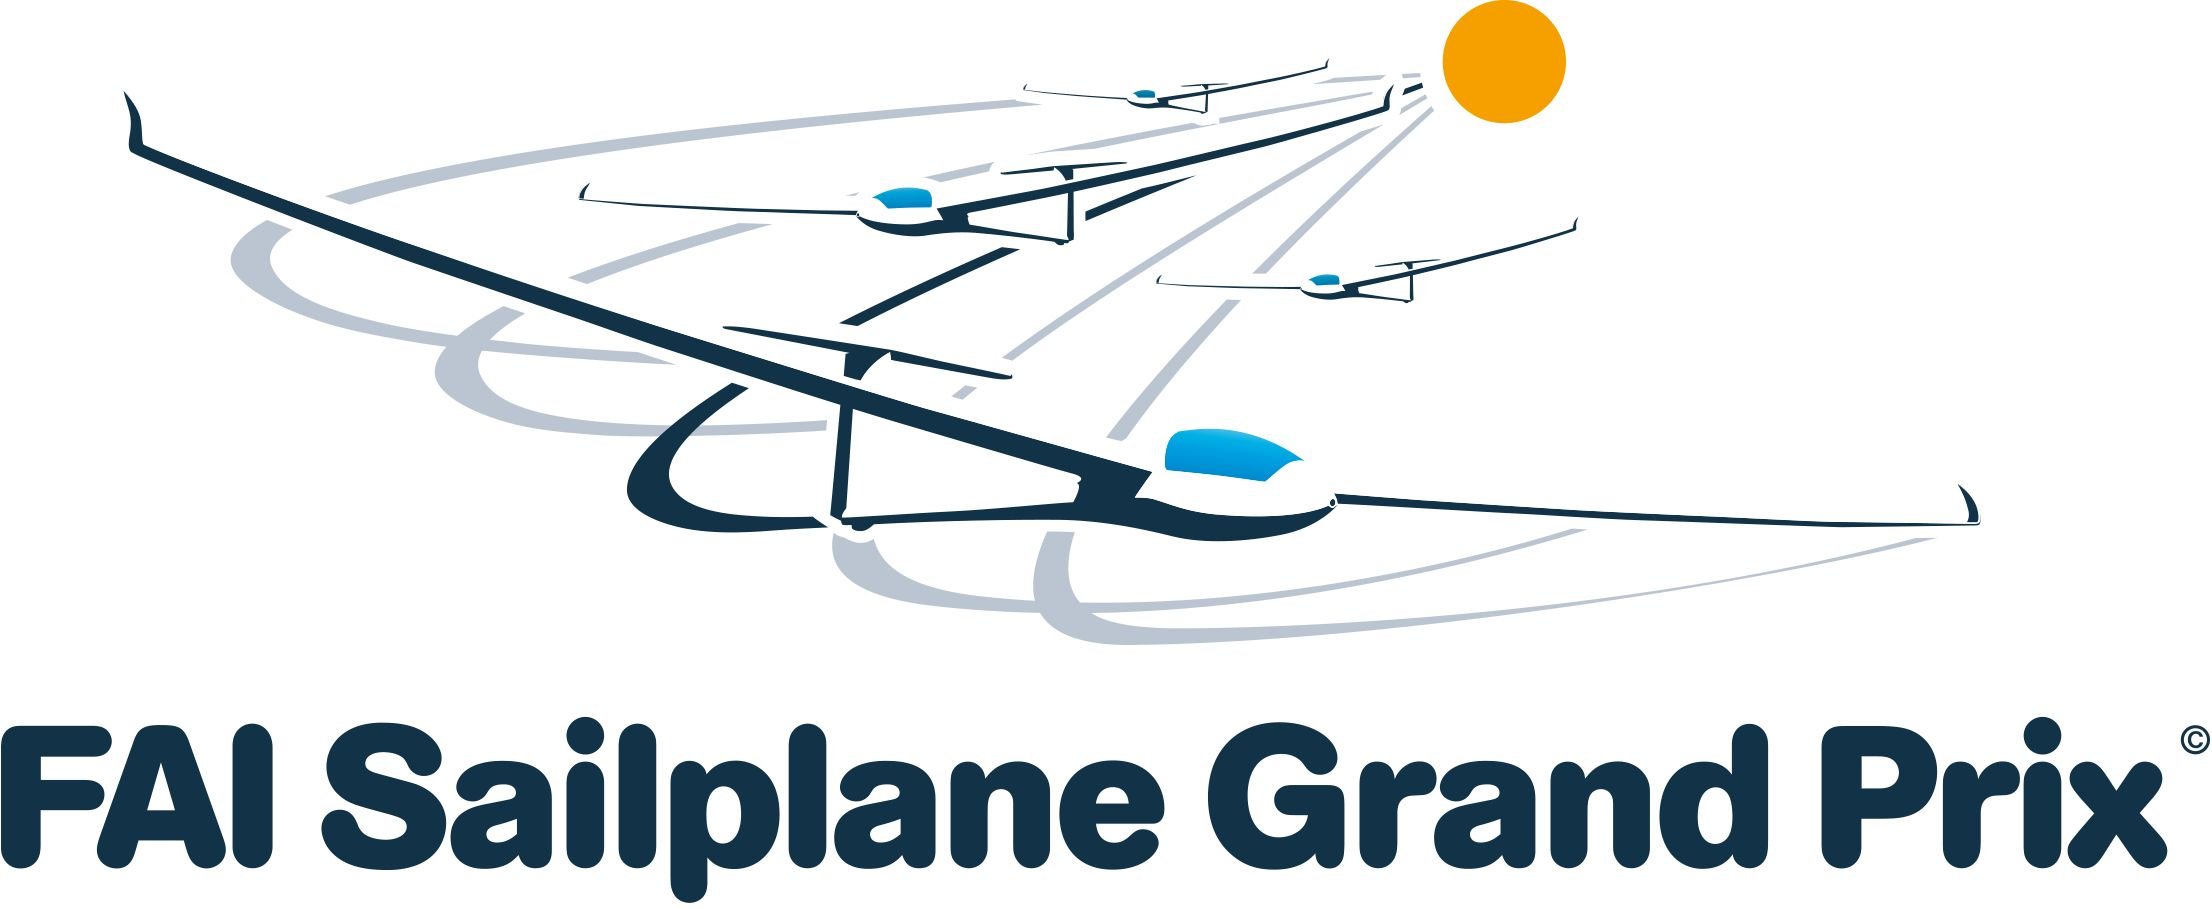 [Series 12 FAI Sailplane Grand Prix] Germany Venue – Aalen-Elchingen